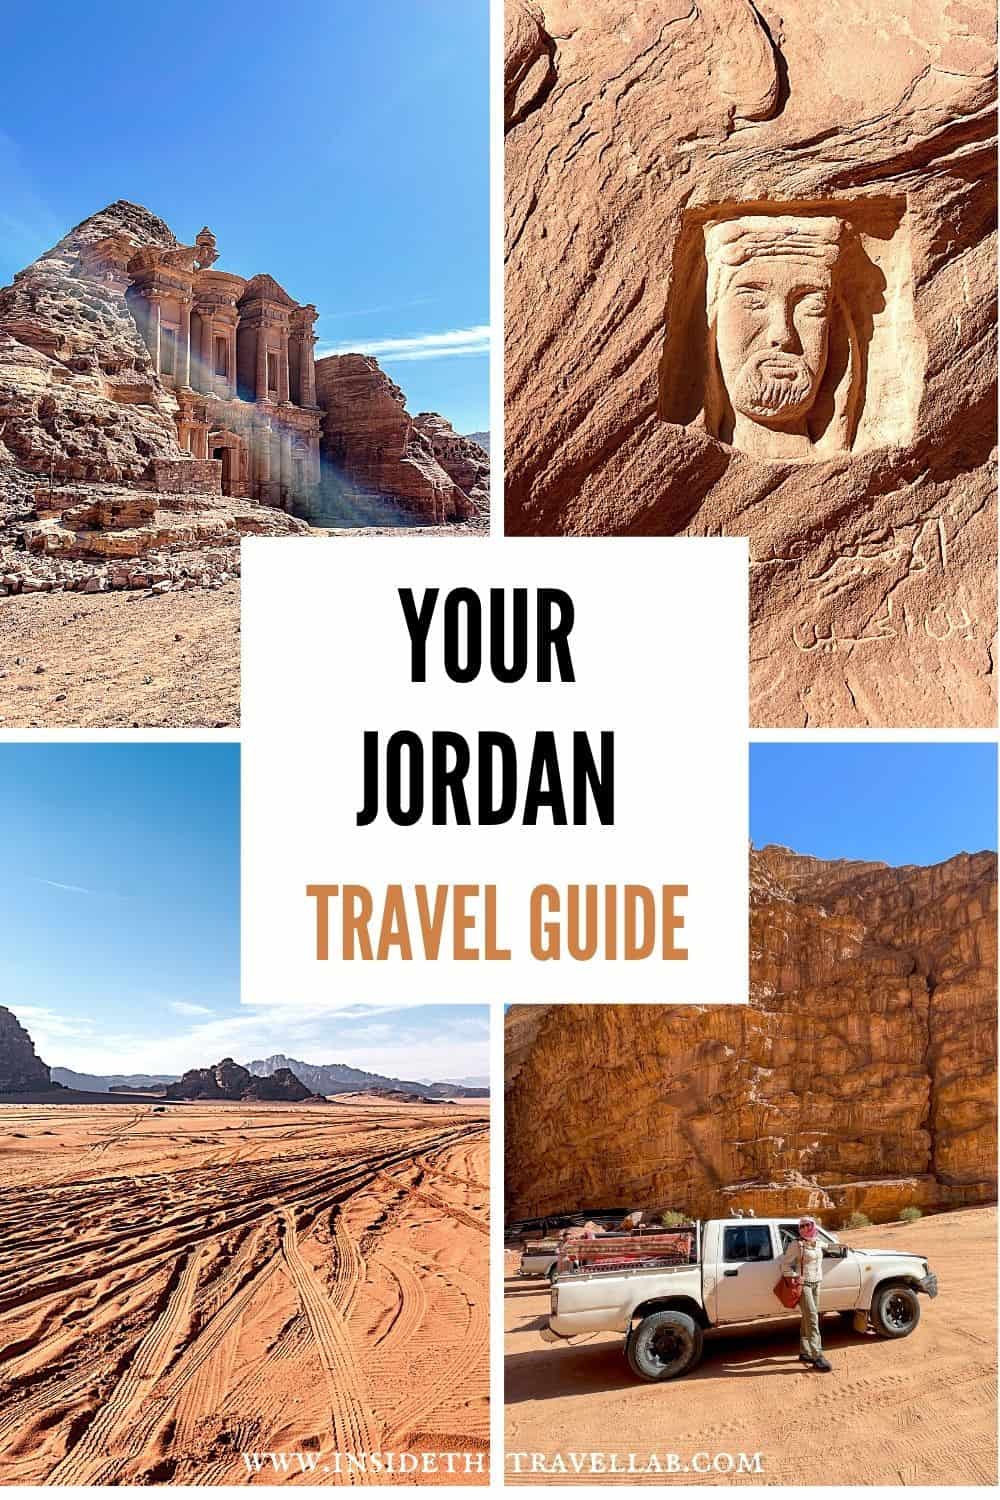 Jordan Travel Guide - Jordan Itinerary 10 day, 7 day, 5 day